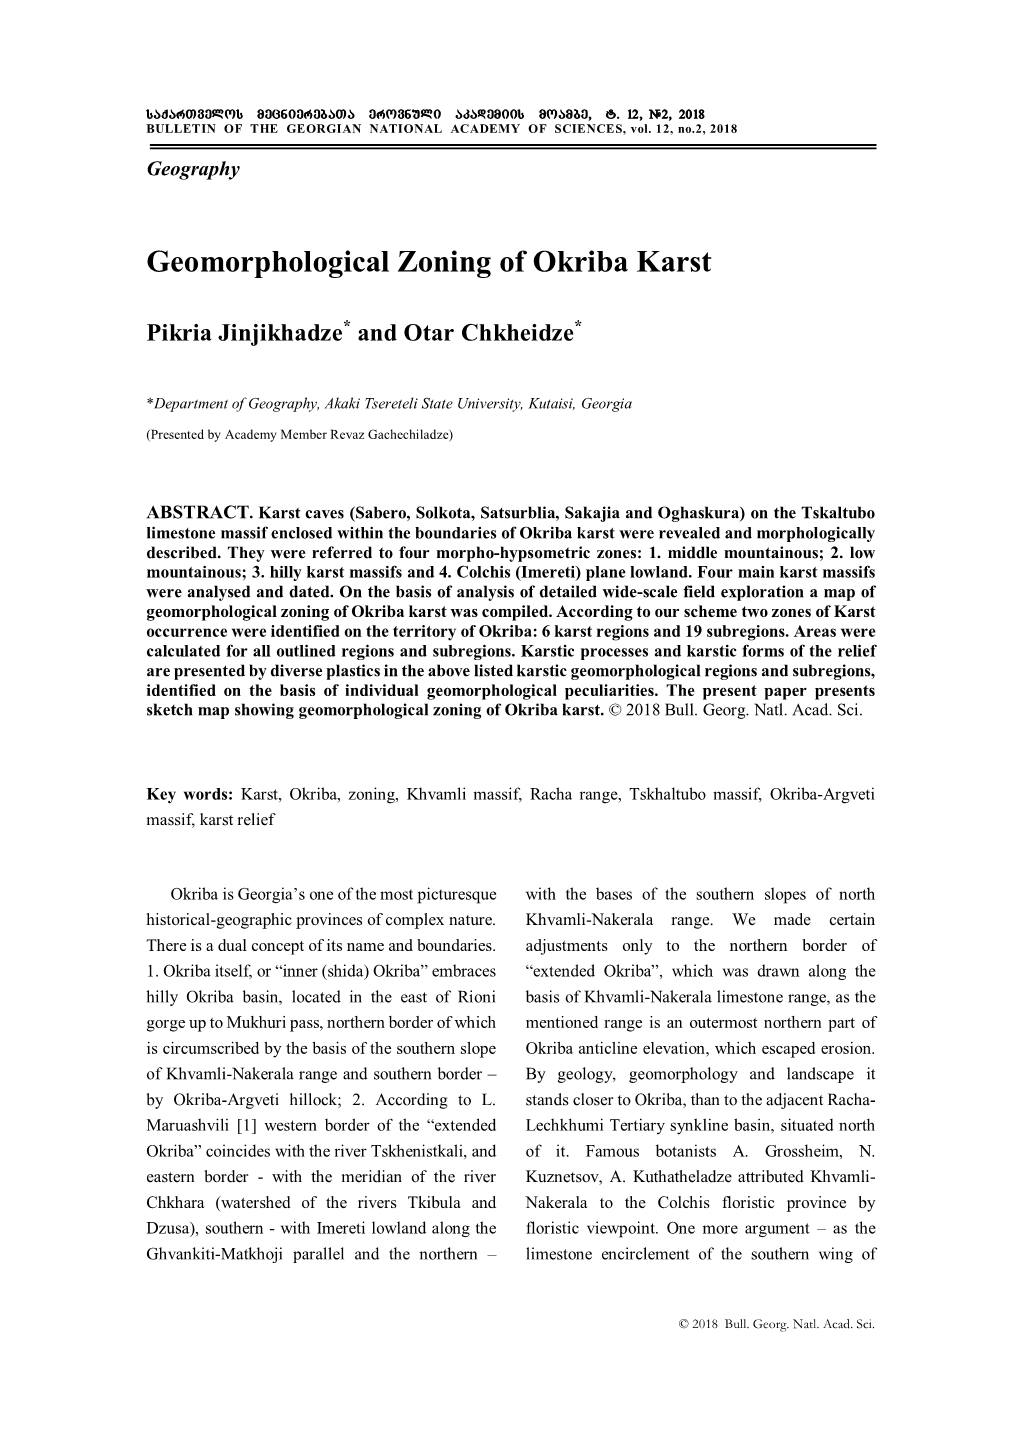 Geomorphological Zoning of Okriba Karst